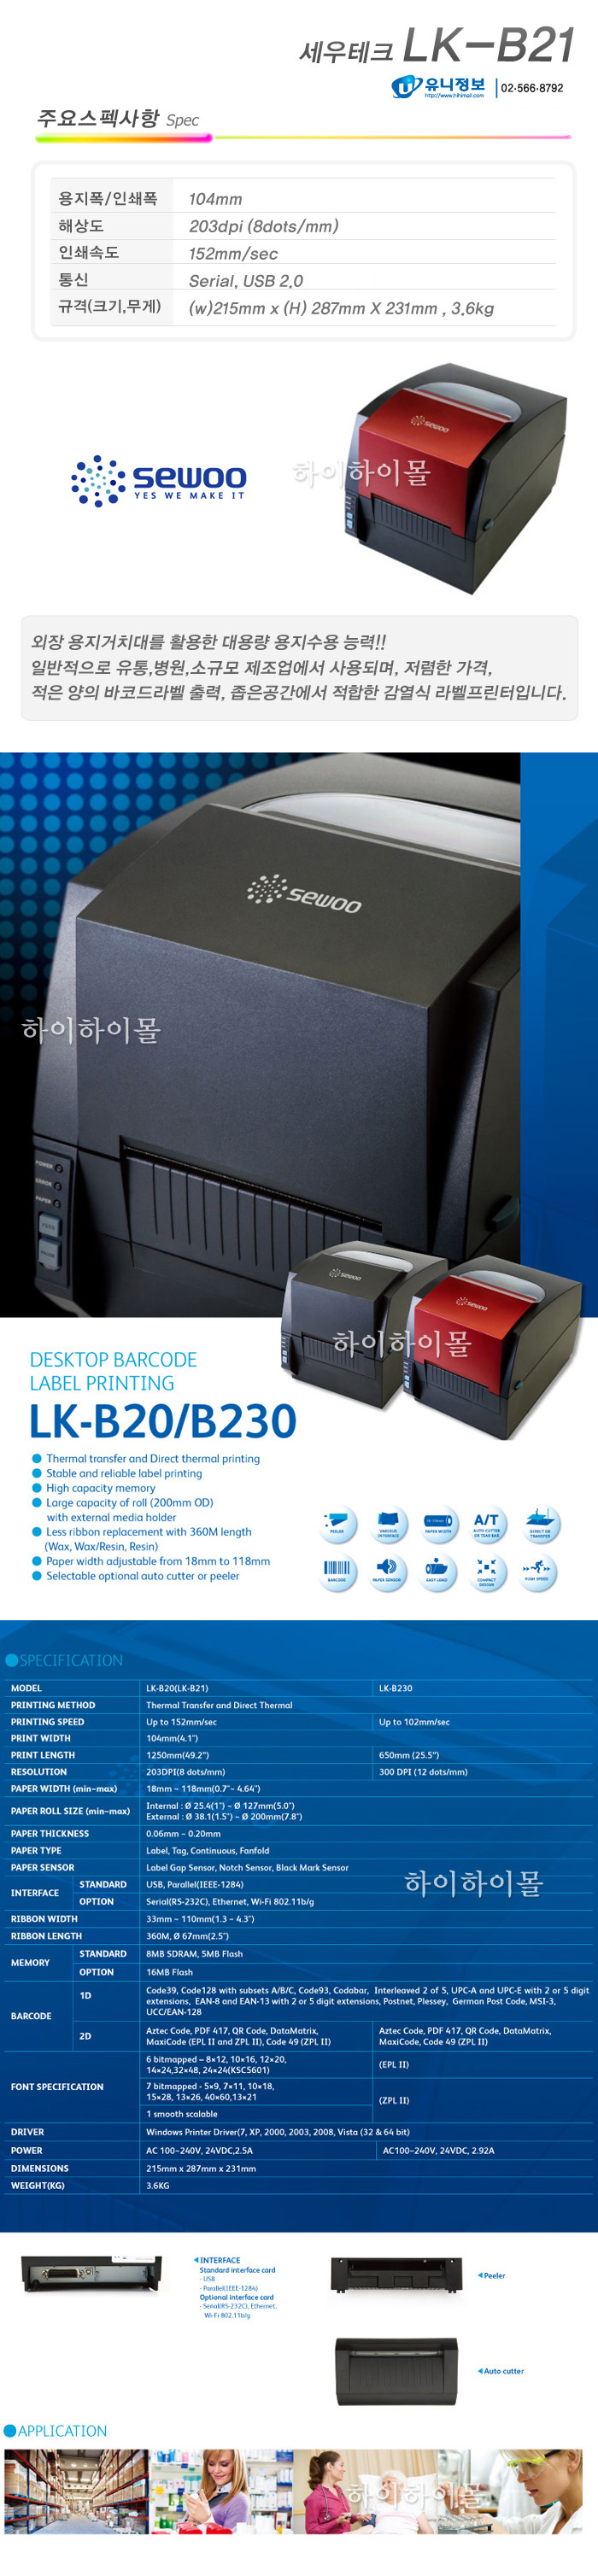 lk-b21 104mm 203dpi 152mm/sec 인쇄속도 통신 serial usb2.0